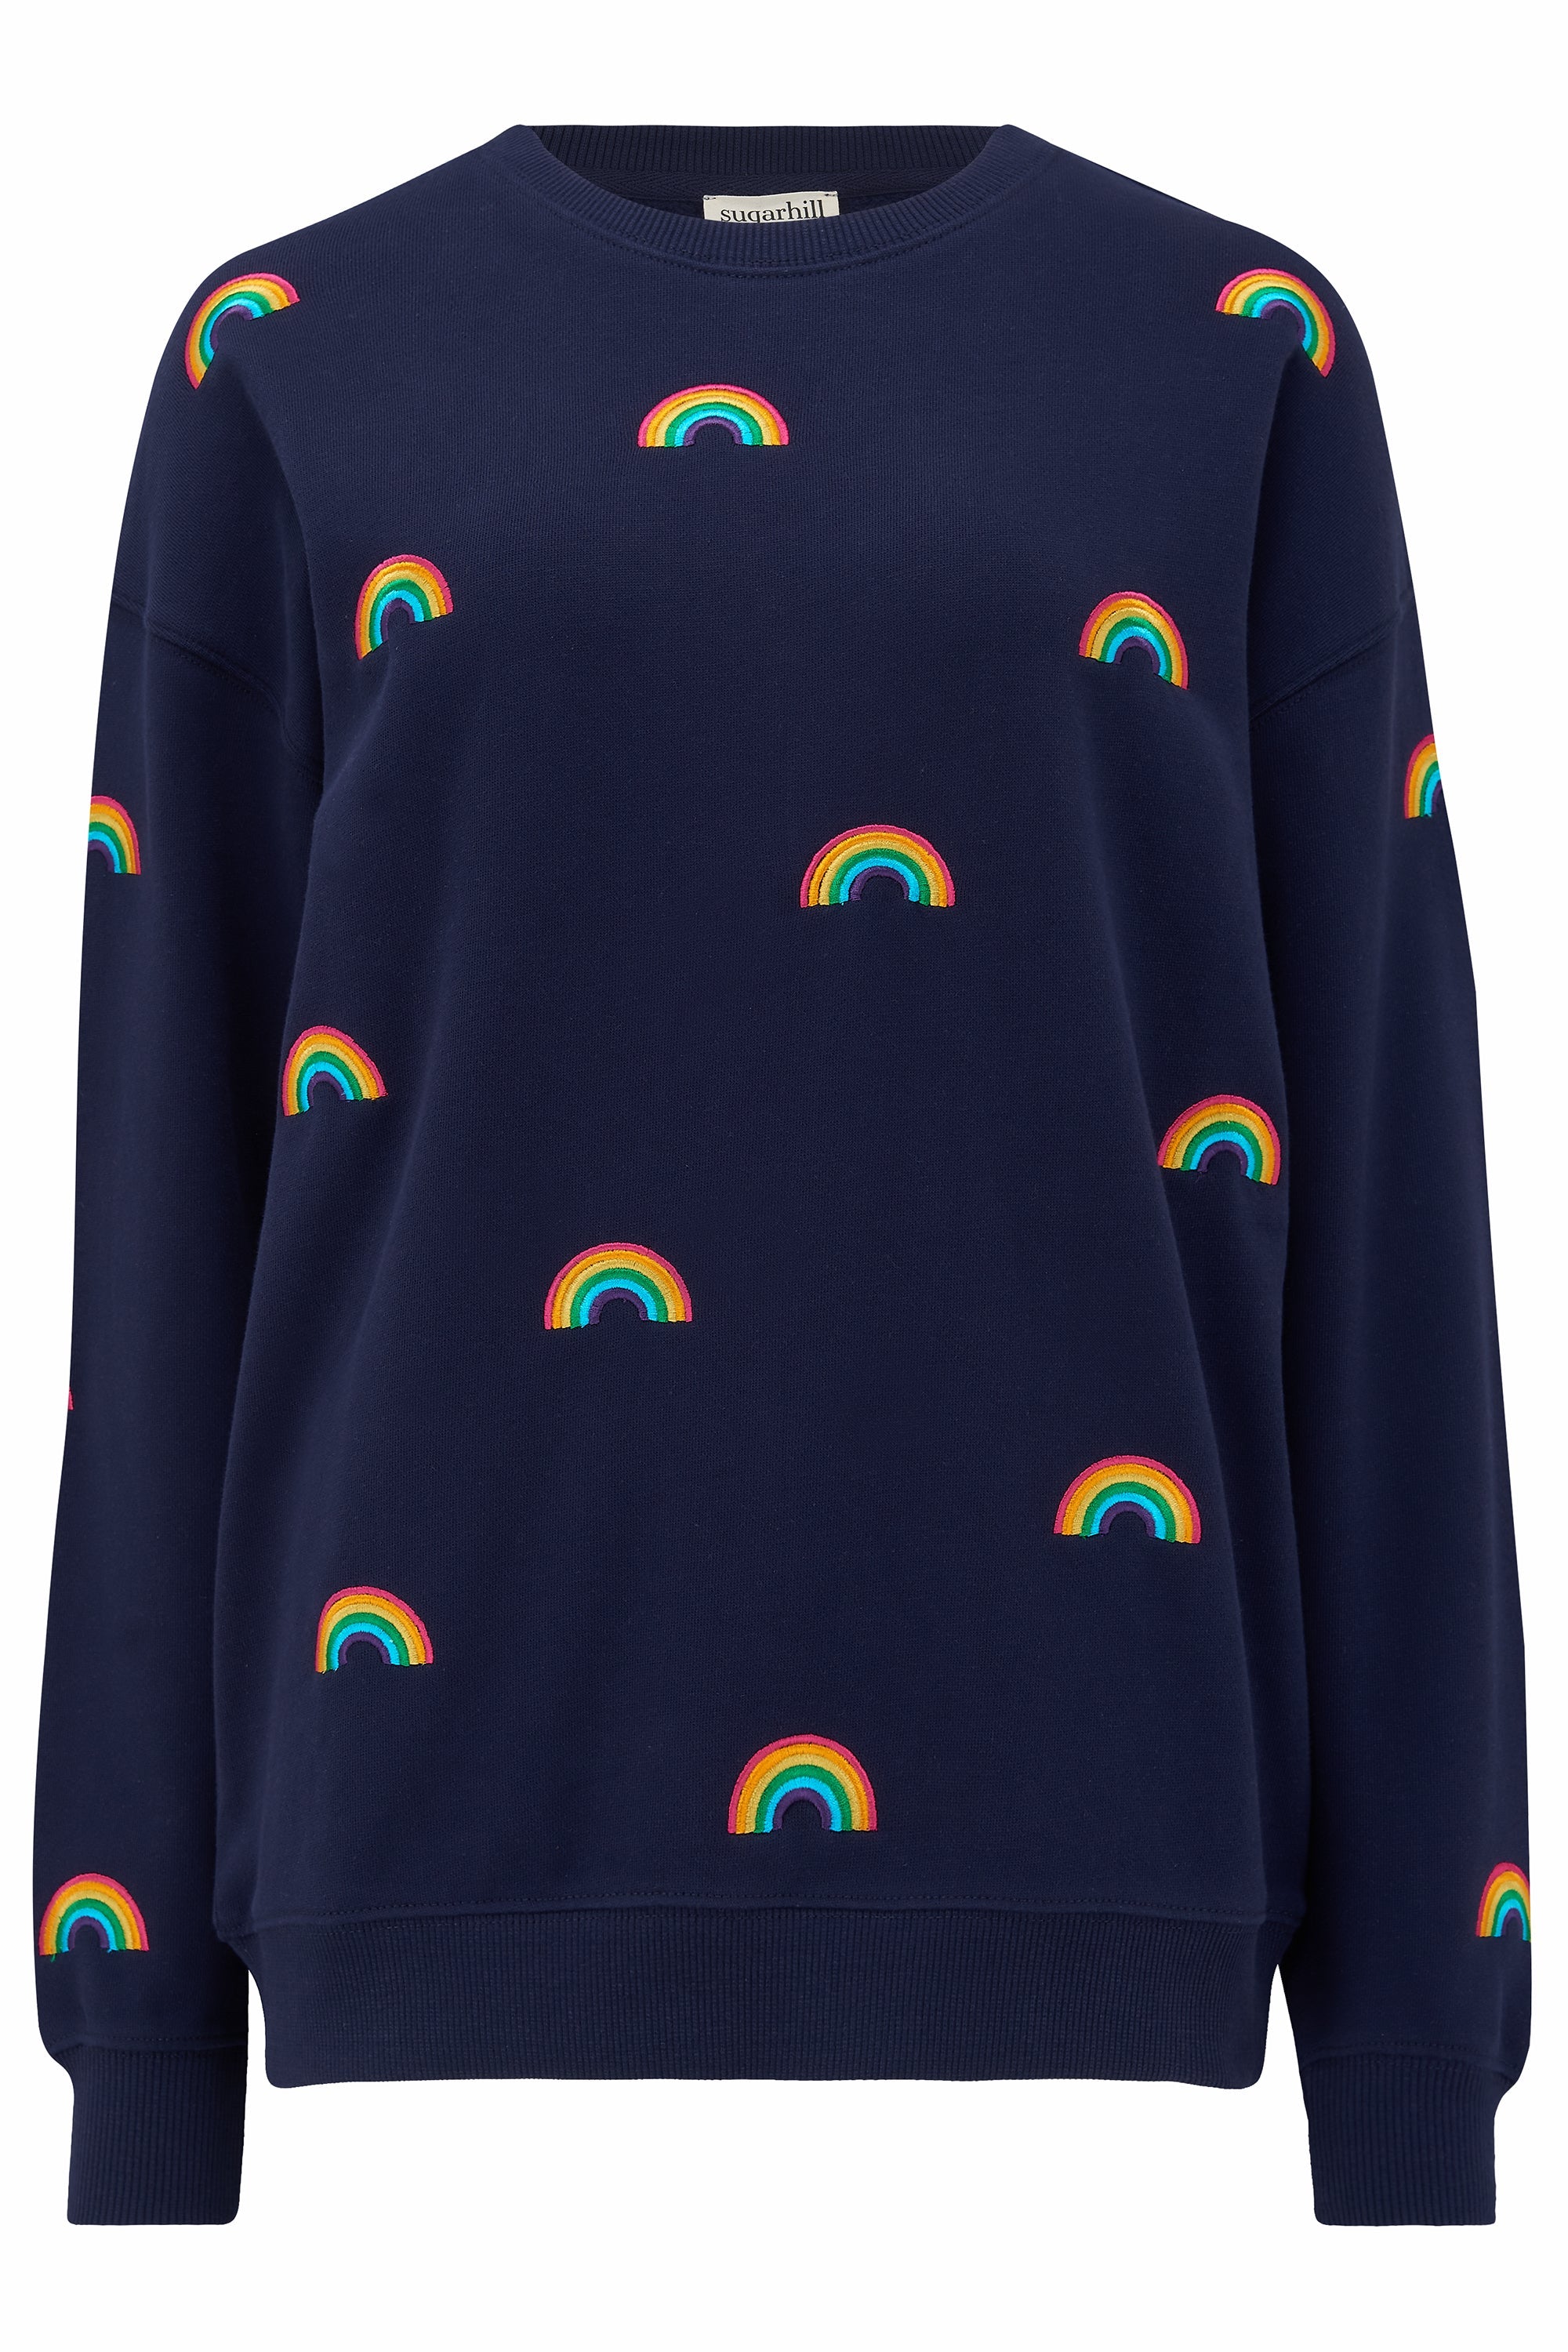 Noah Sweatshirt | Mini Embroidered Rainbows (Navy)